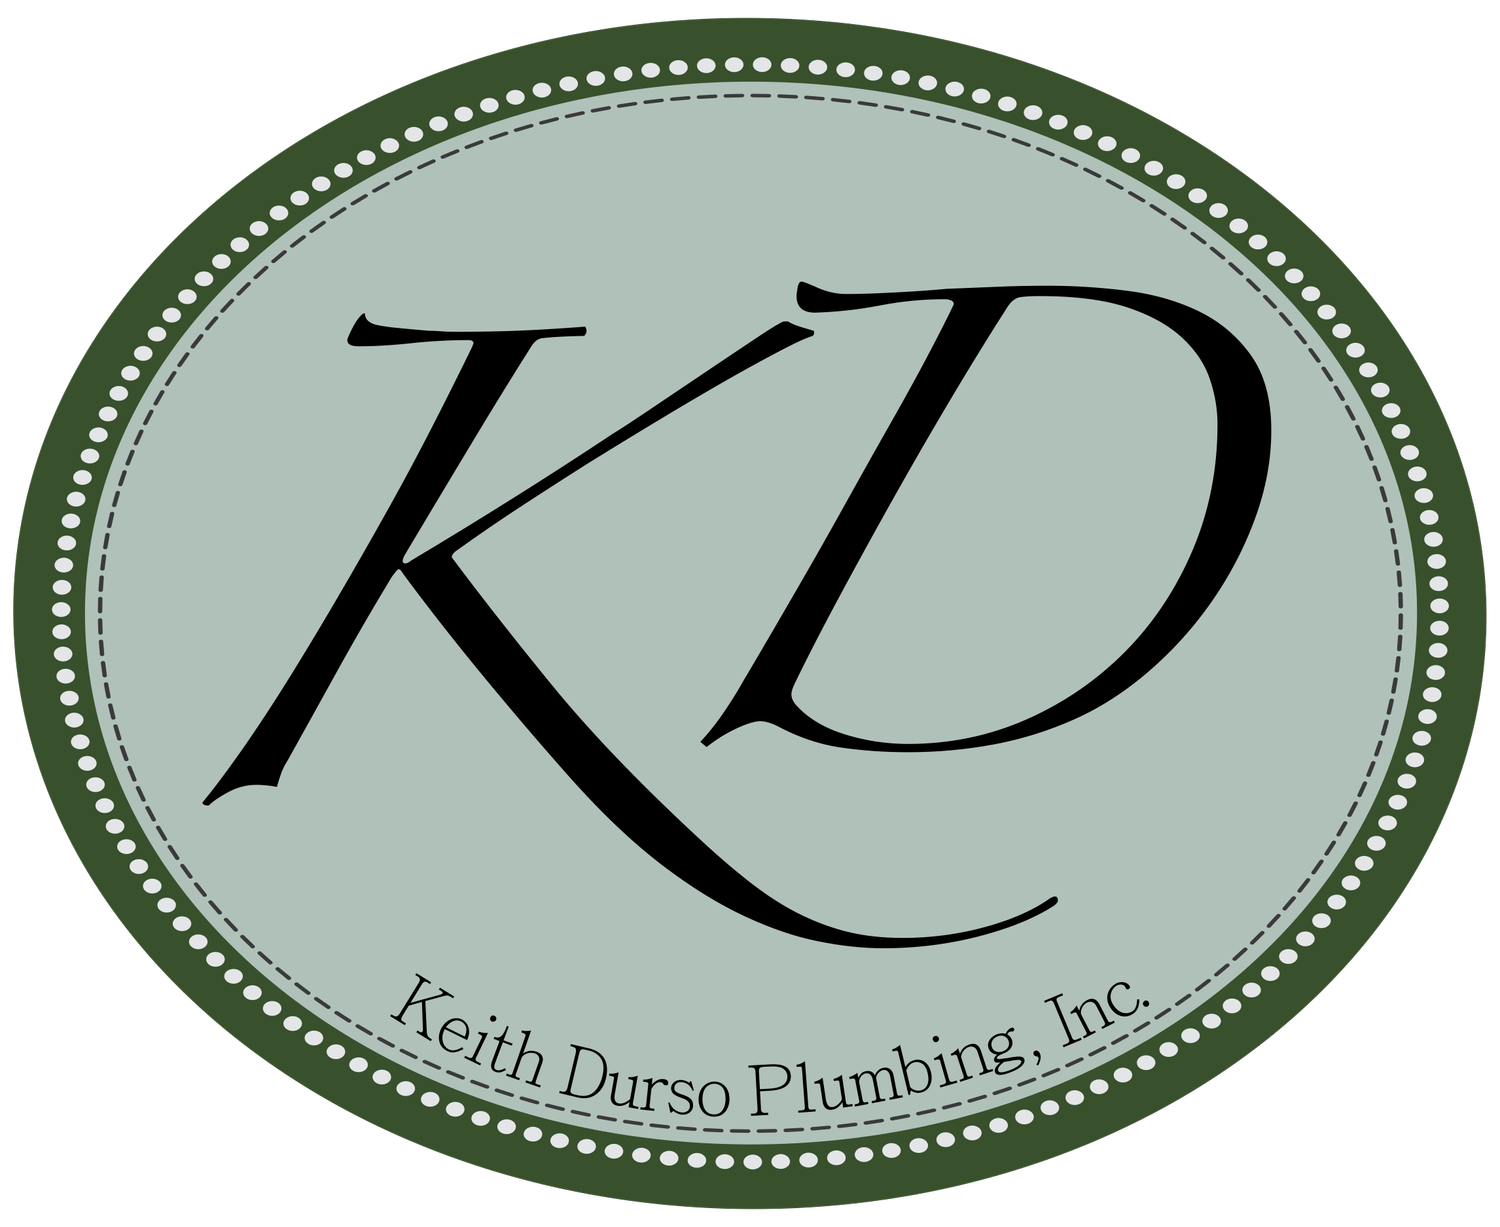 Keith Durso Plumbing & Remodeling